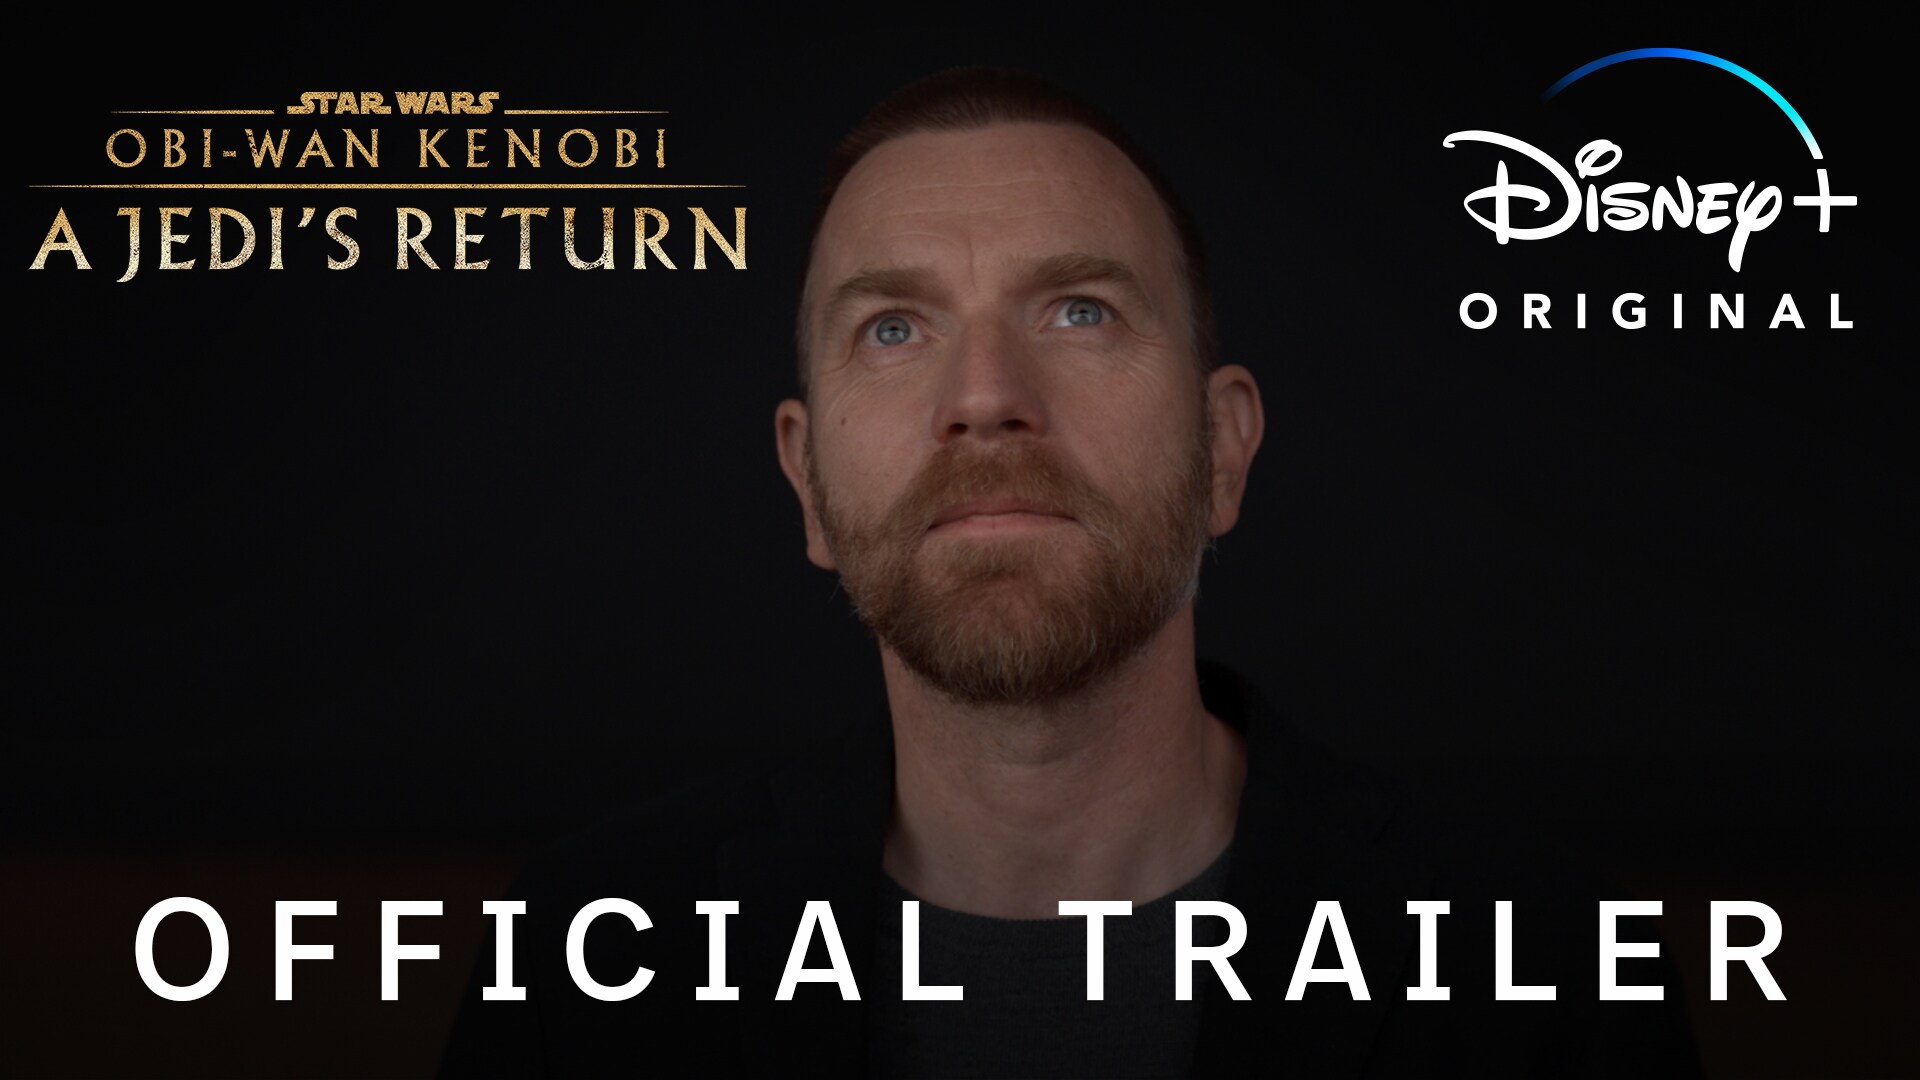 Official Trailer - Obi-Wan Kenobi: A Jedi’s Return